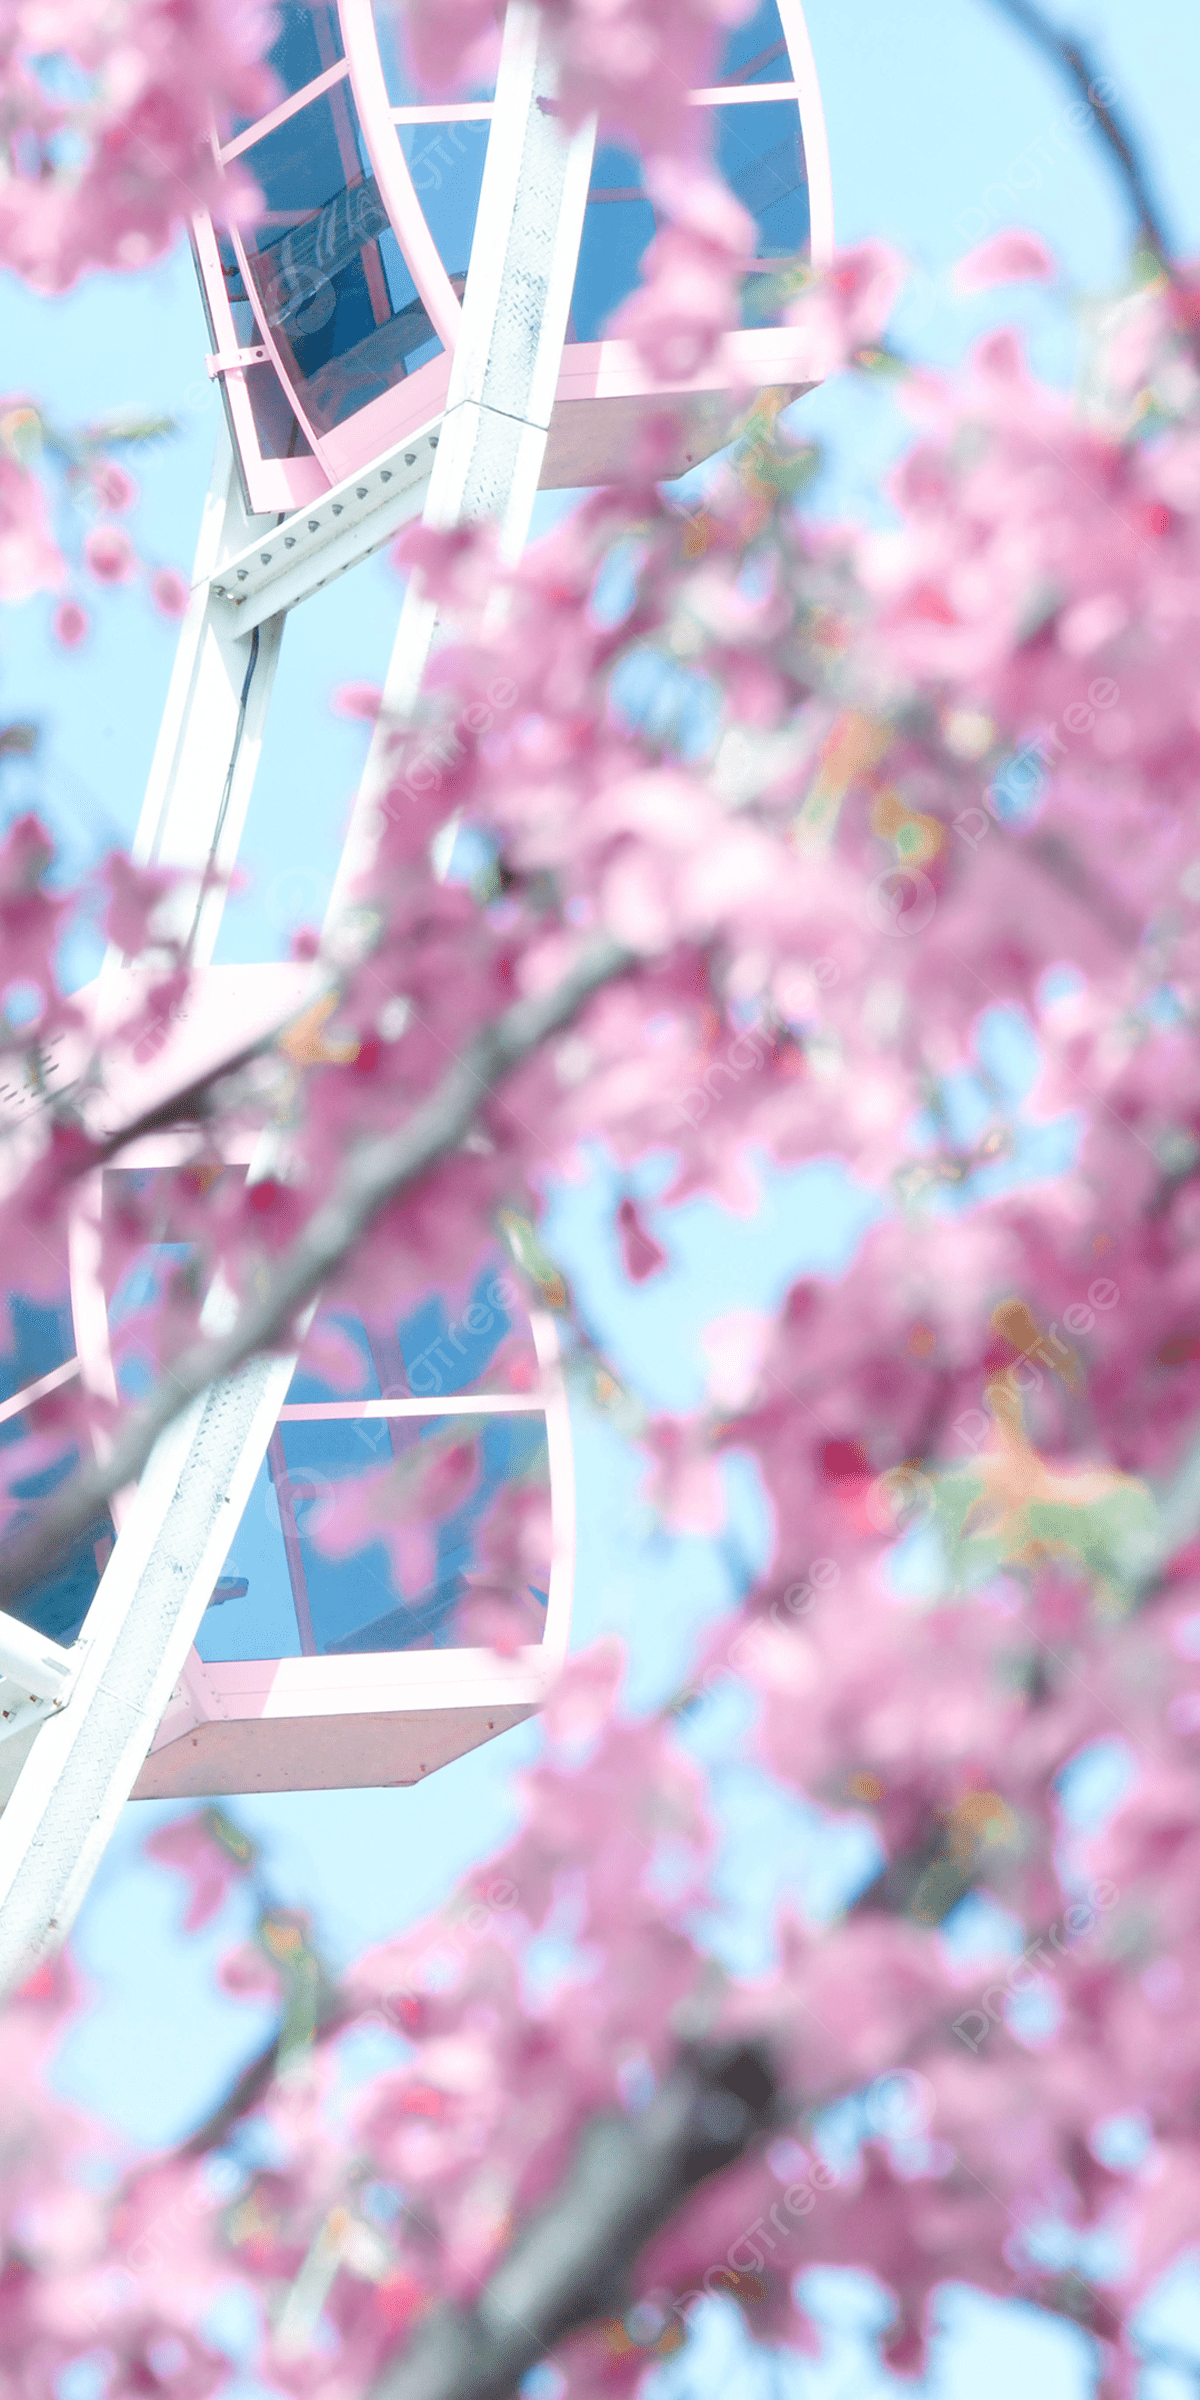 A ferris wheel behind cherry blossoms - Cherry blossom